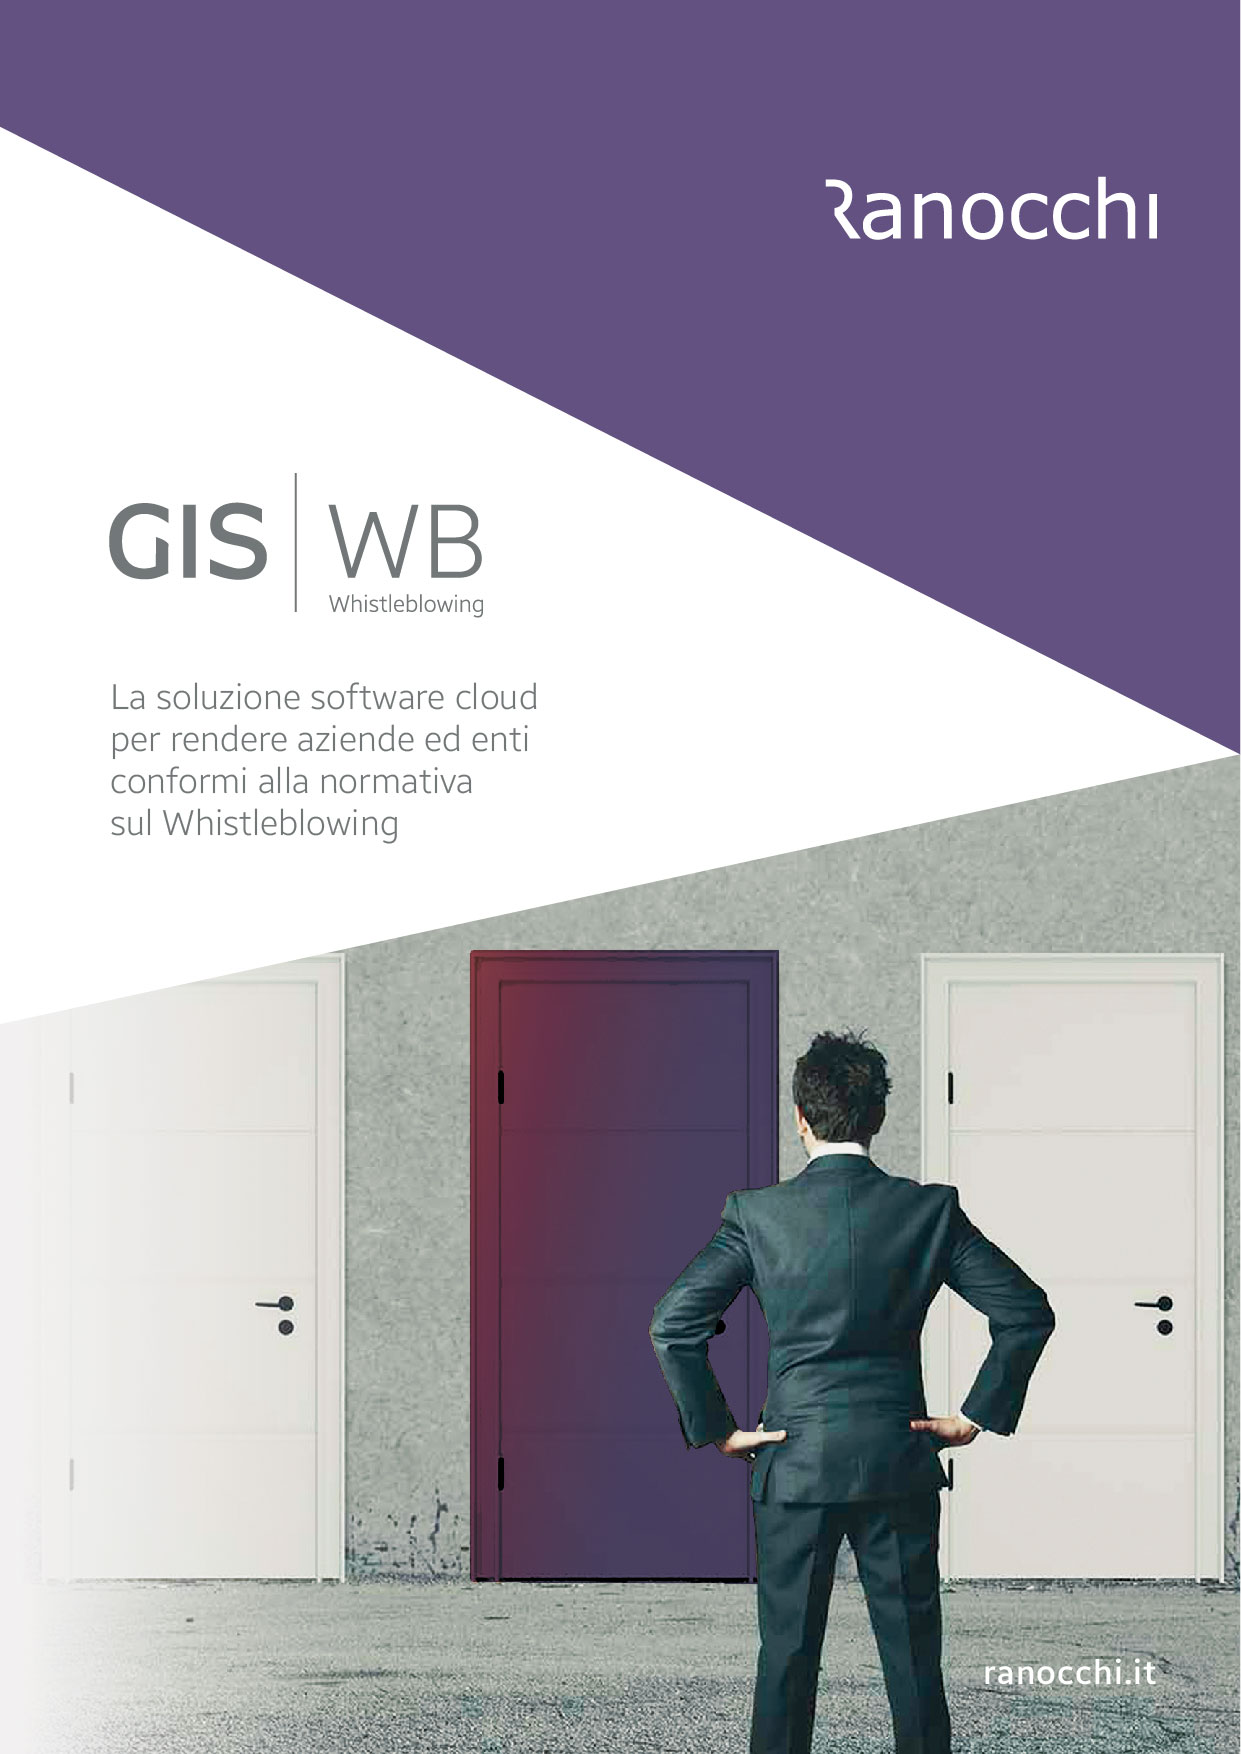 GIS WB